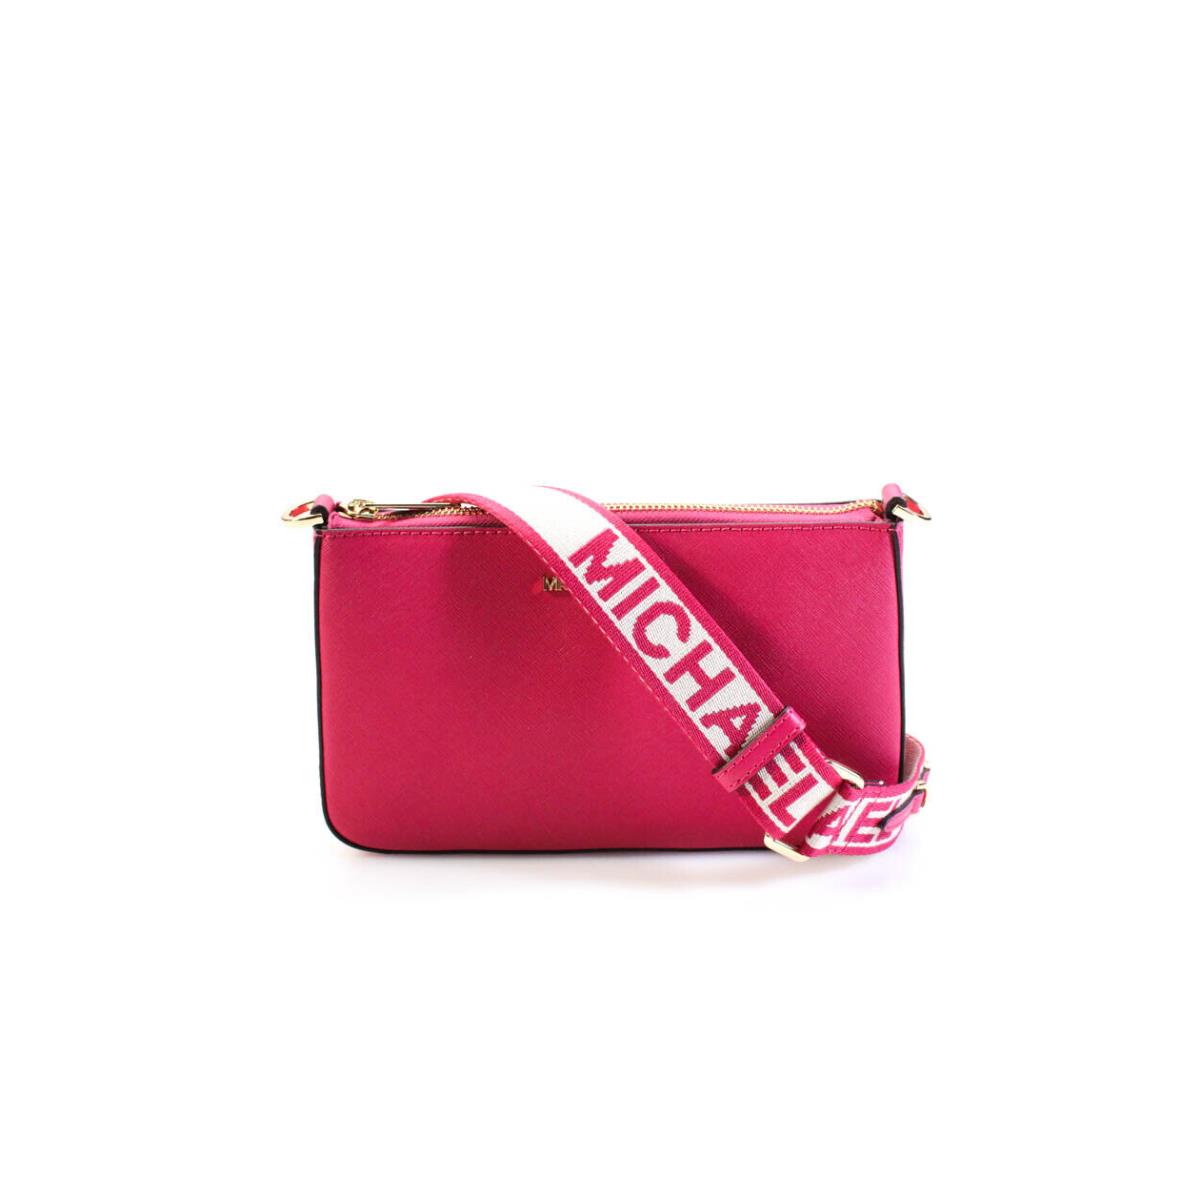 Kors Womens Electric Pink Small Tech Attach Shoulder Bag Handbag